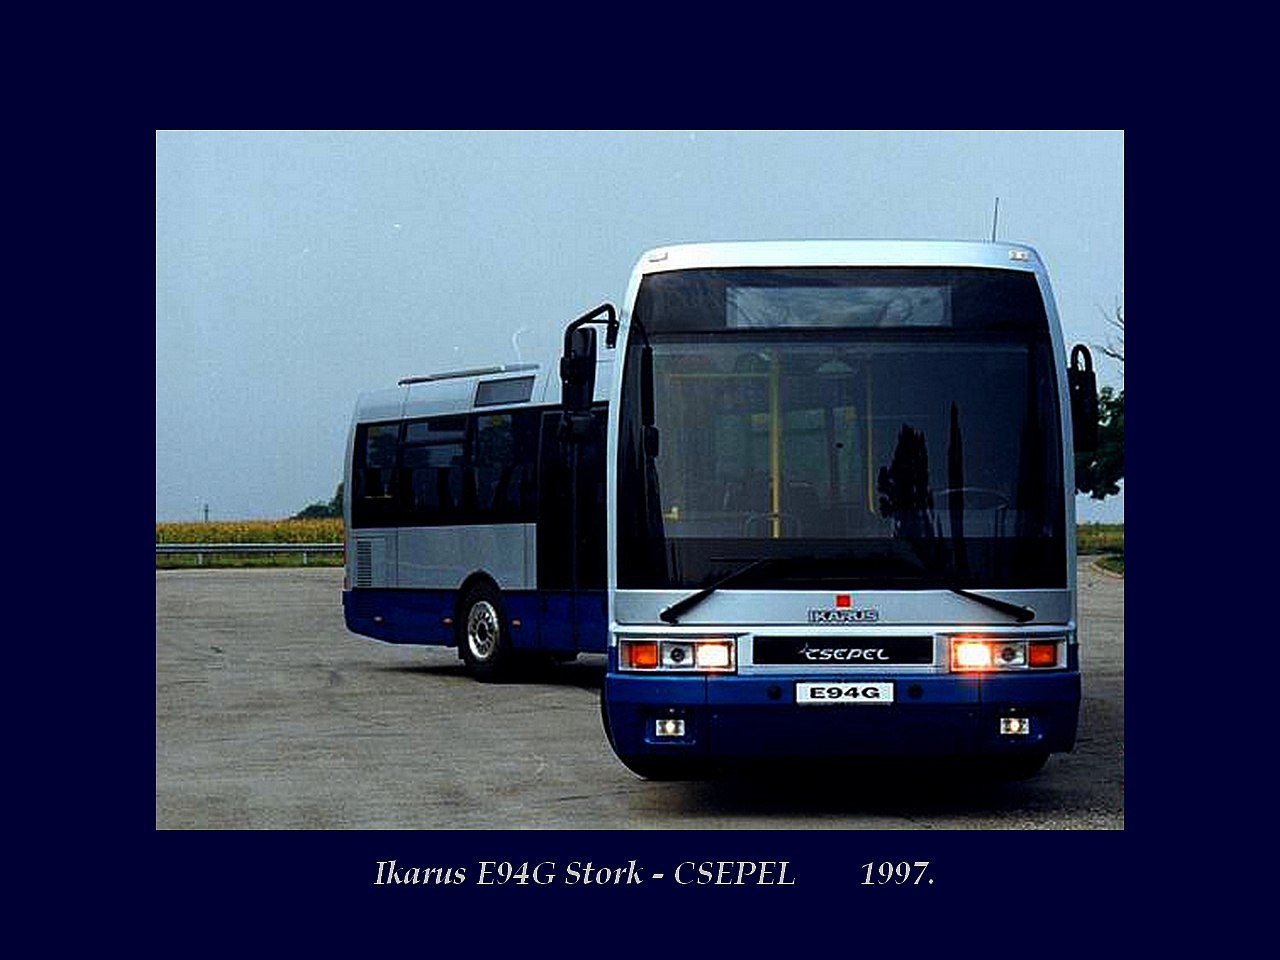 Magyar Busz, Ikarus E94G Stork Csepel 1997.